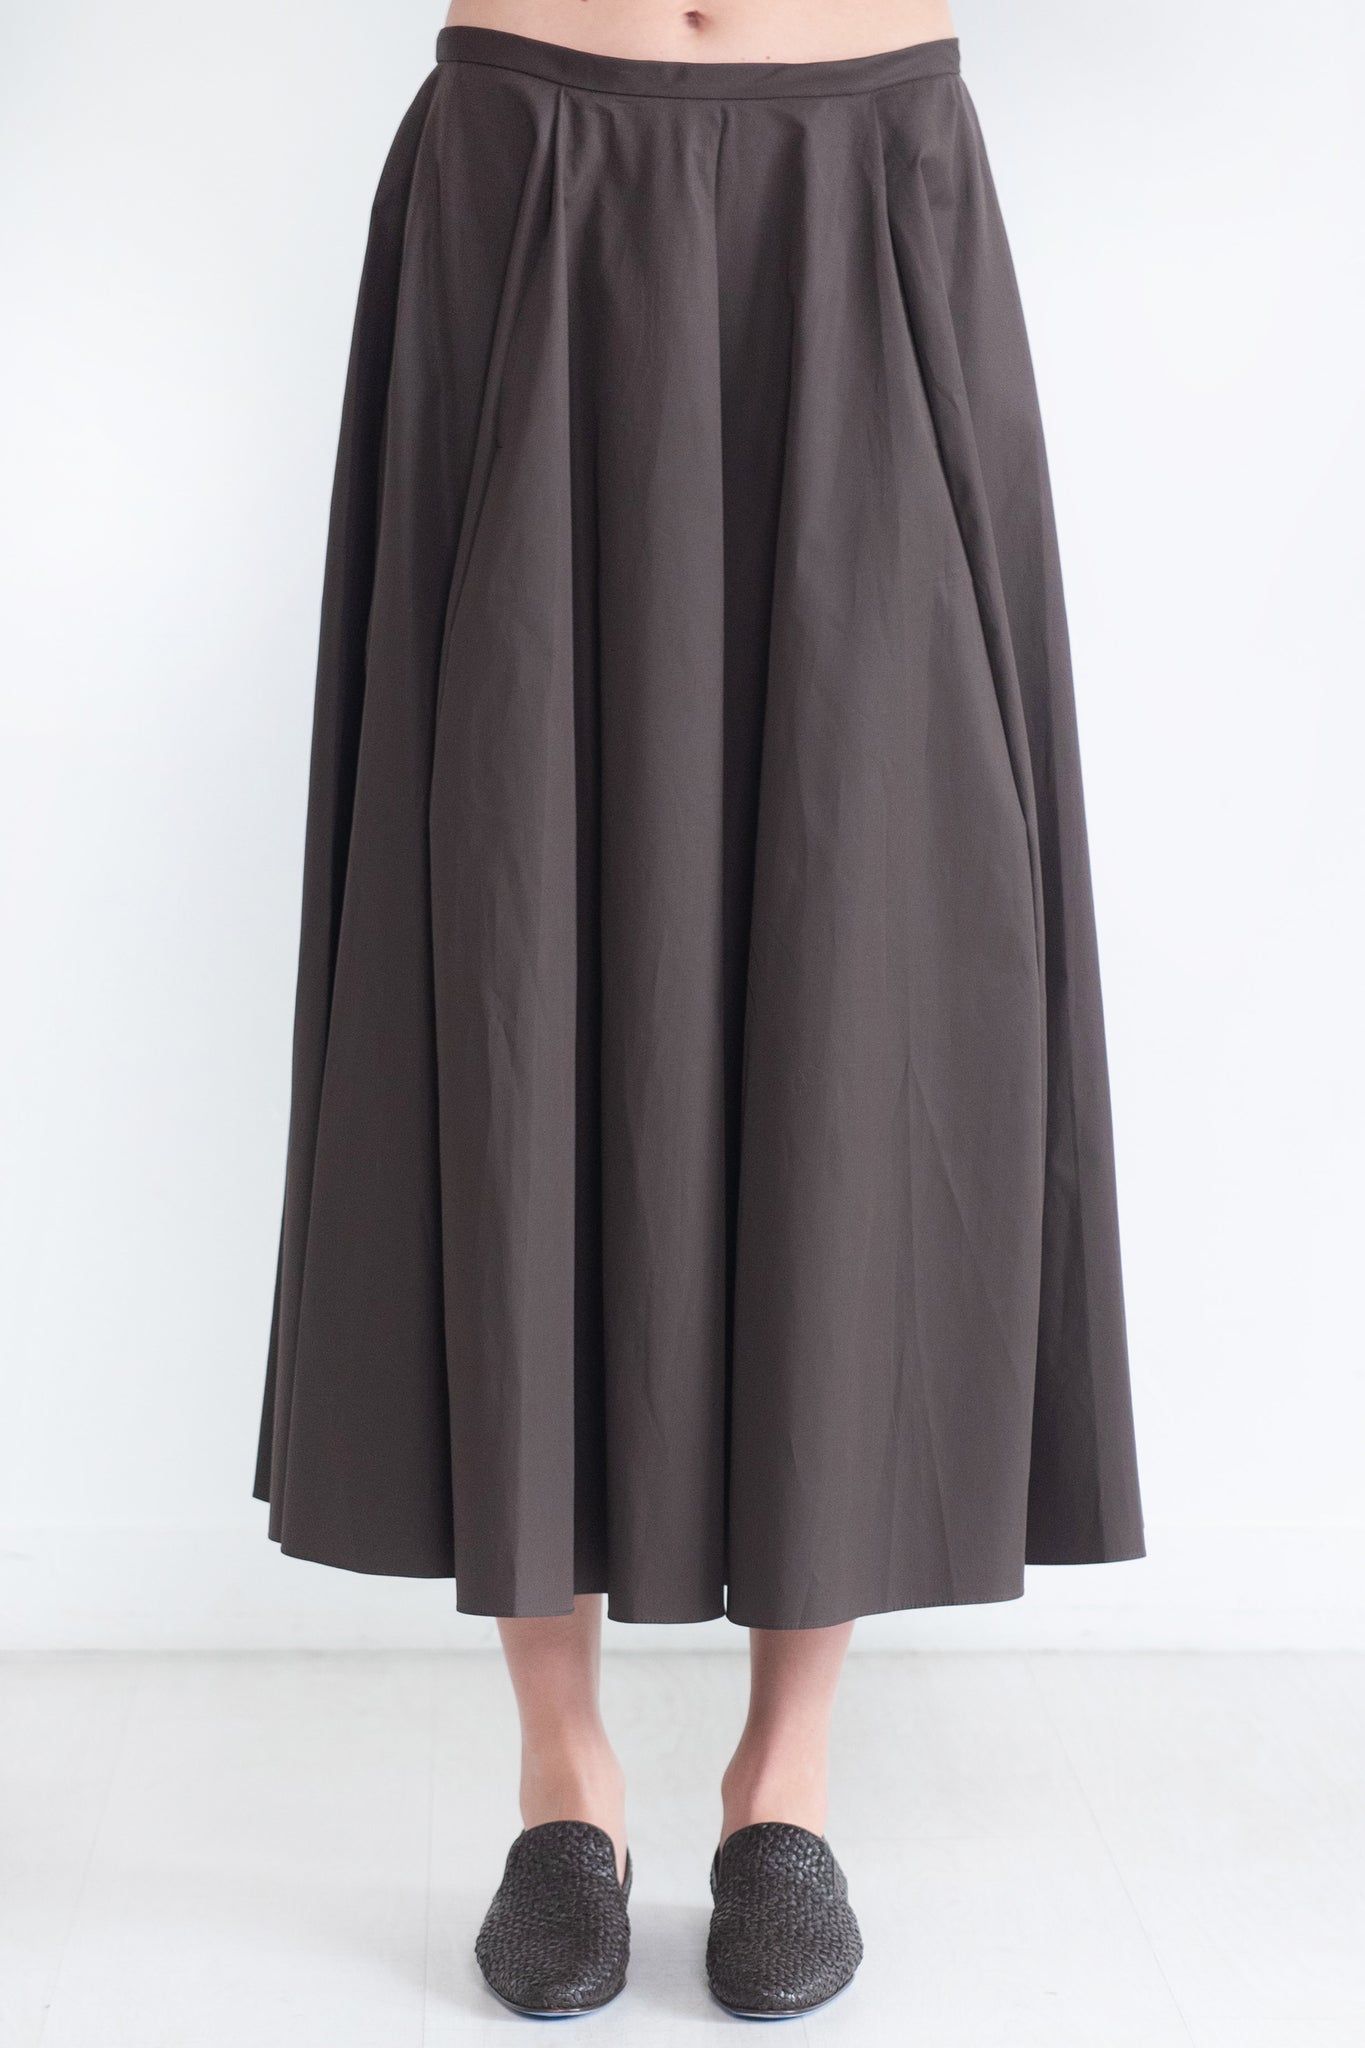 VERONIQUE LEROY - Long Skirt, Chocolate